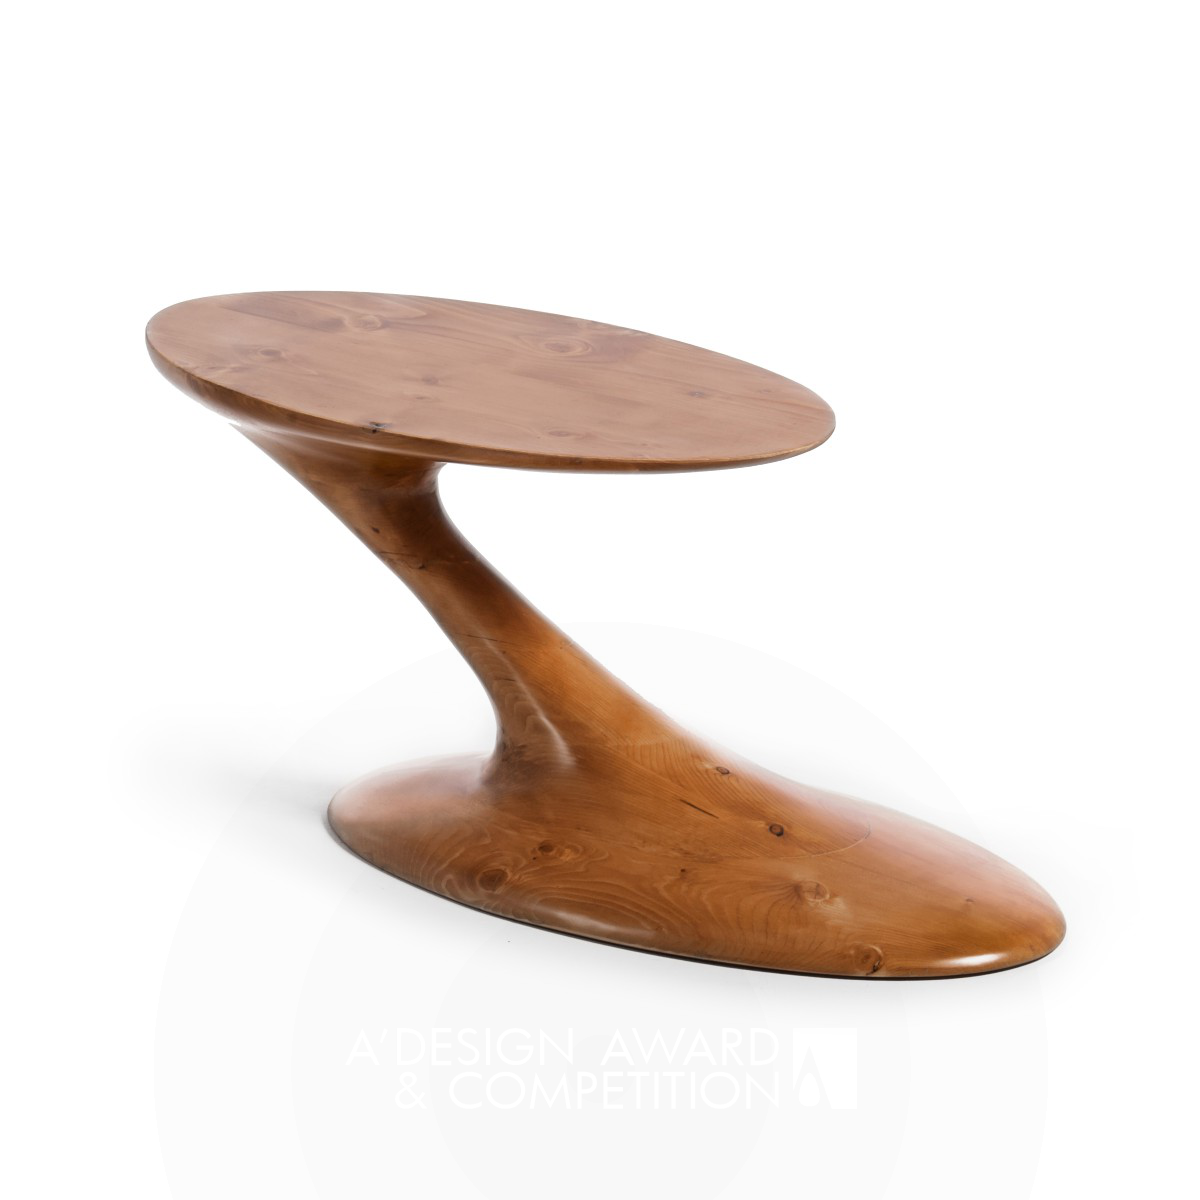 Peyto Side Table by Kamyar Ahmadi Azari Silver Furniture Design Award Winner 2019 